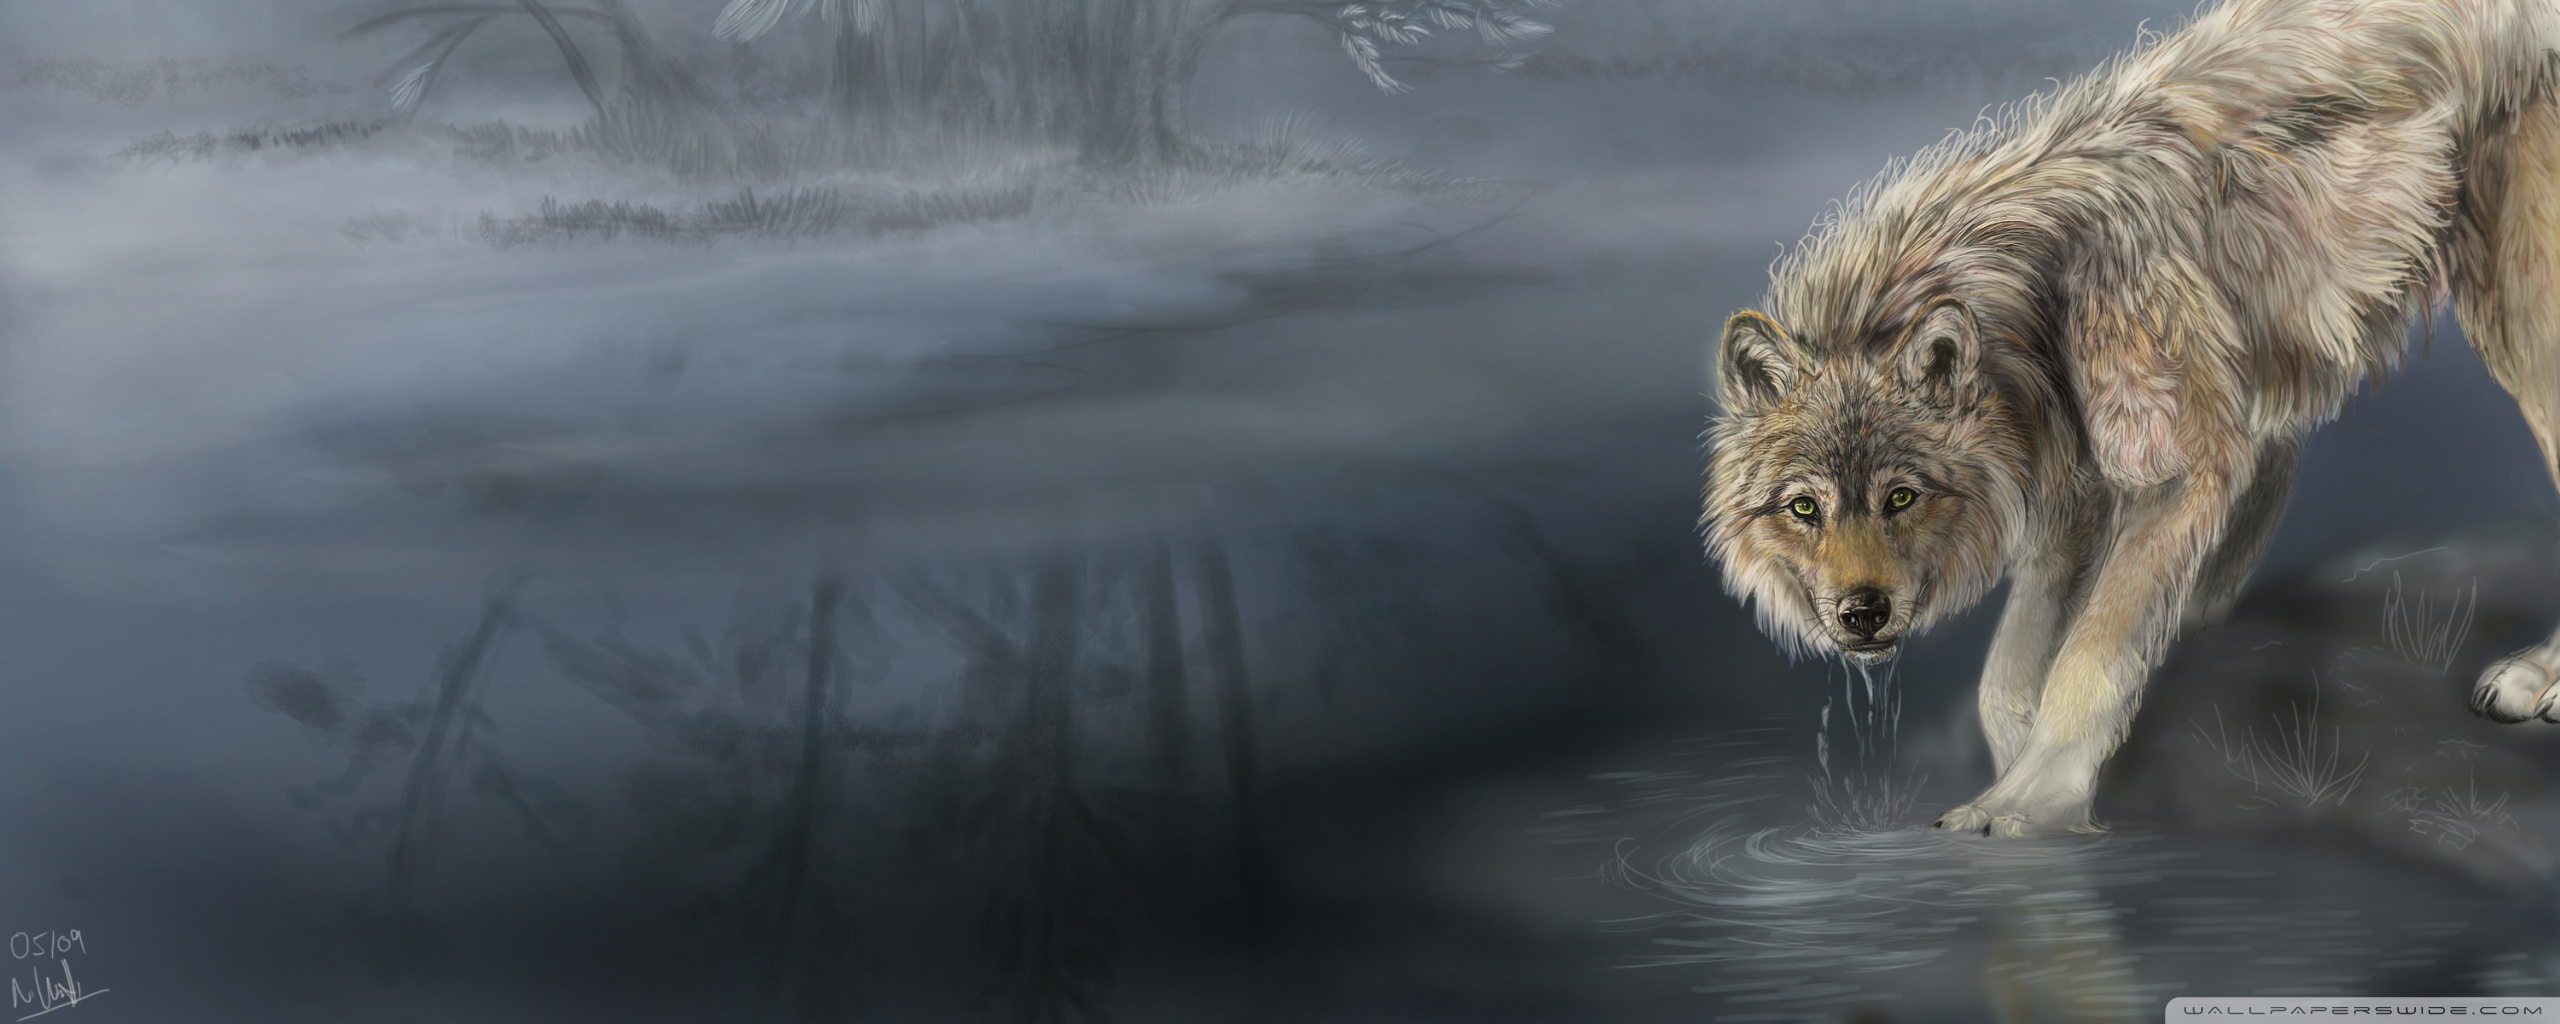 Wolf Drinking Water Painting Ultra HD Desktop Background Wallpaper